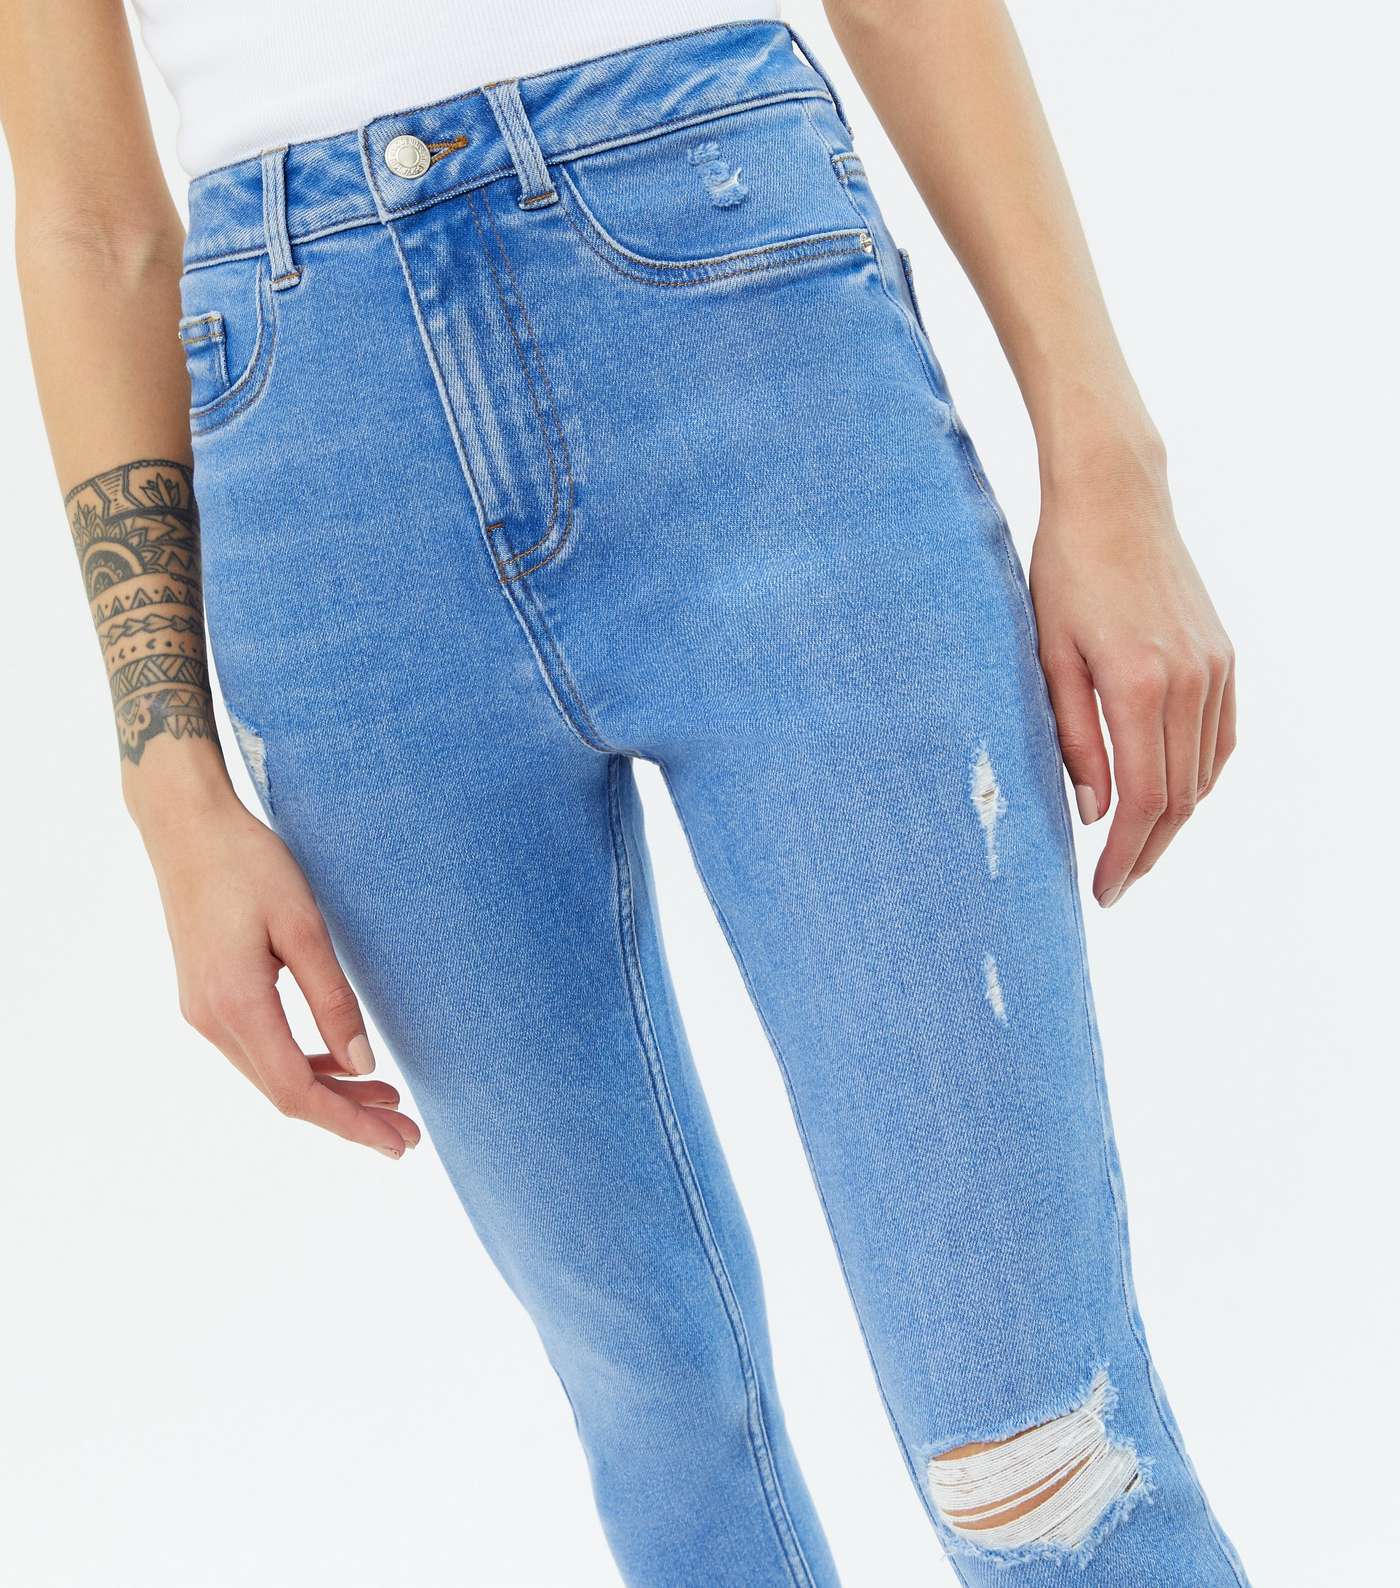 Petite Bright Blue Ripped High Waist Hallie Super Skinny Jeans Image 3